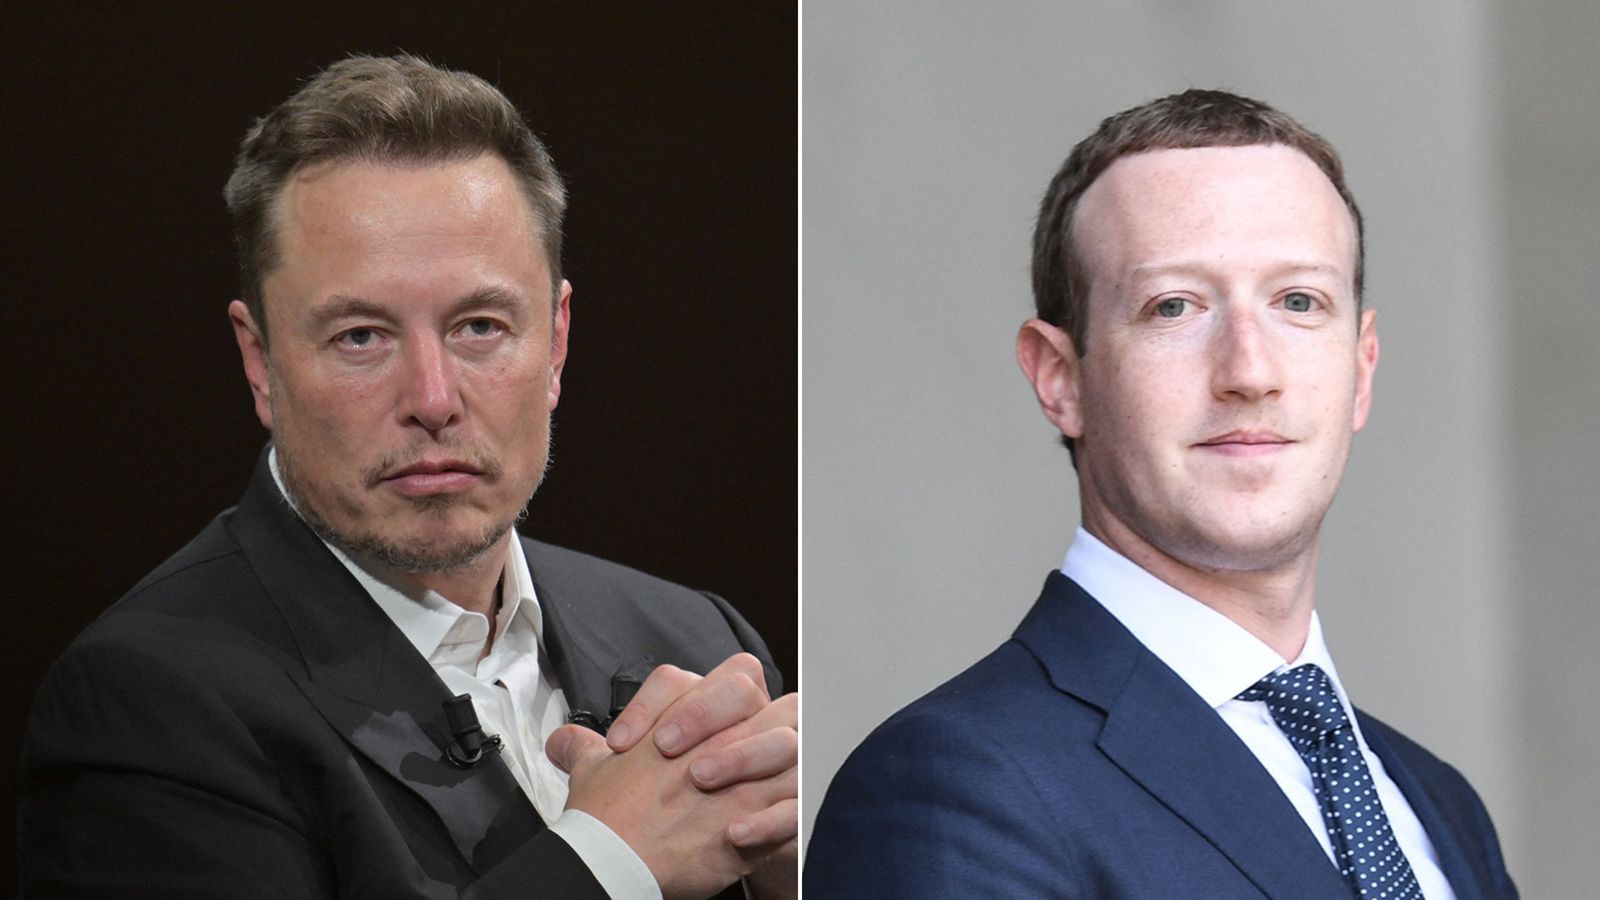 Mark Zuckerberg Thinks Elon Musk's Views on Artificial